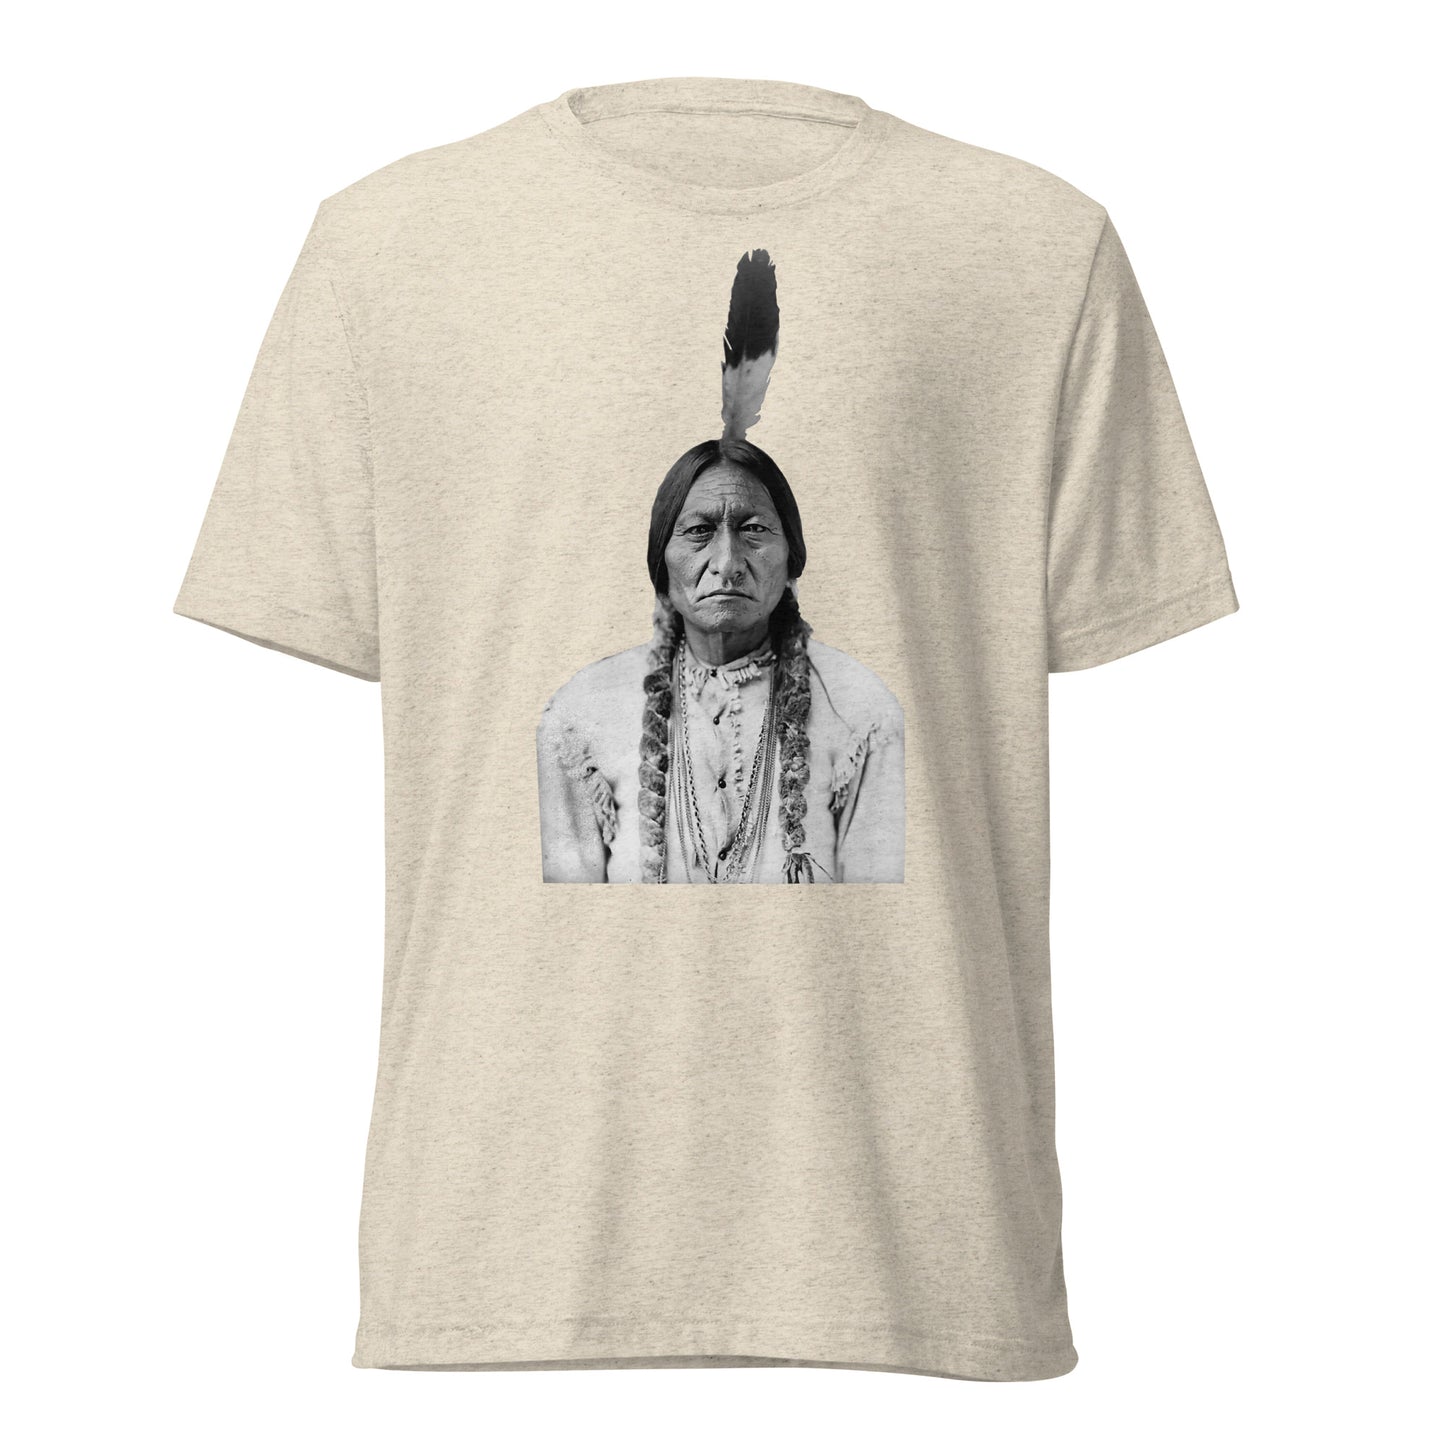 Sitting Bull Artist Edit - Short sleeve t-shirt